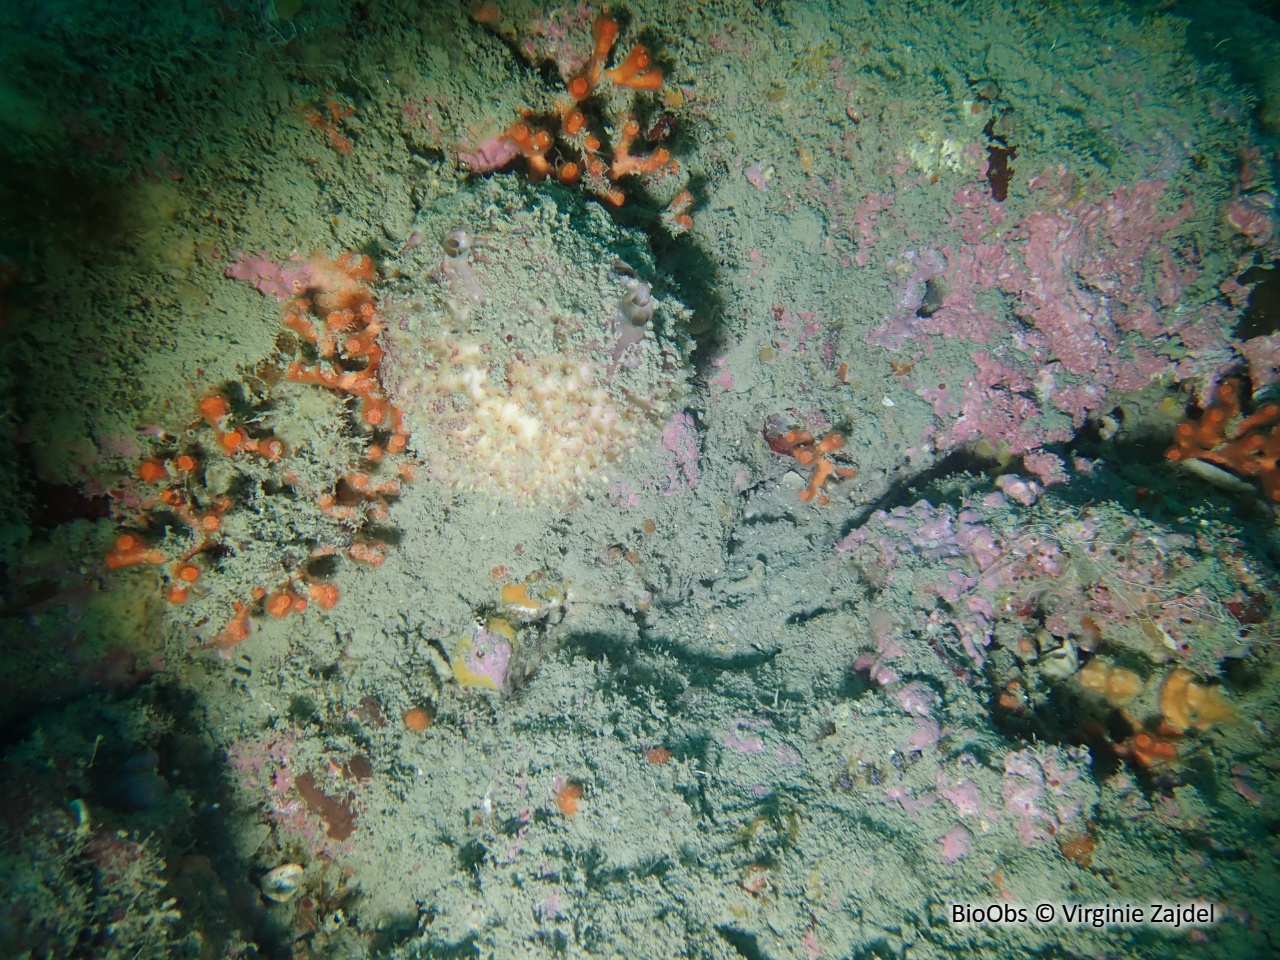 Orange de mer blanche de Méditerranée - Tethya meloni - Virginie Zajdel - BioObs